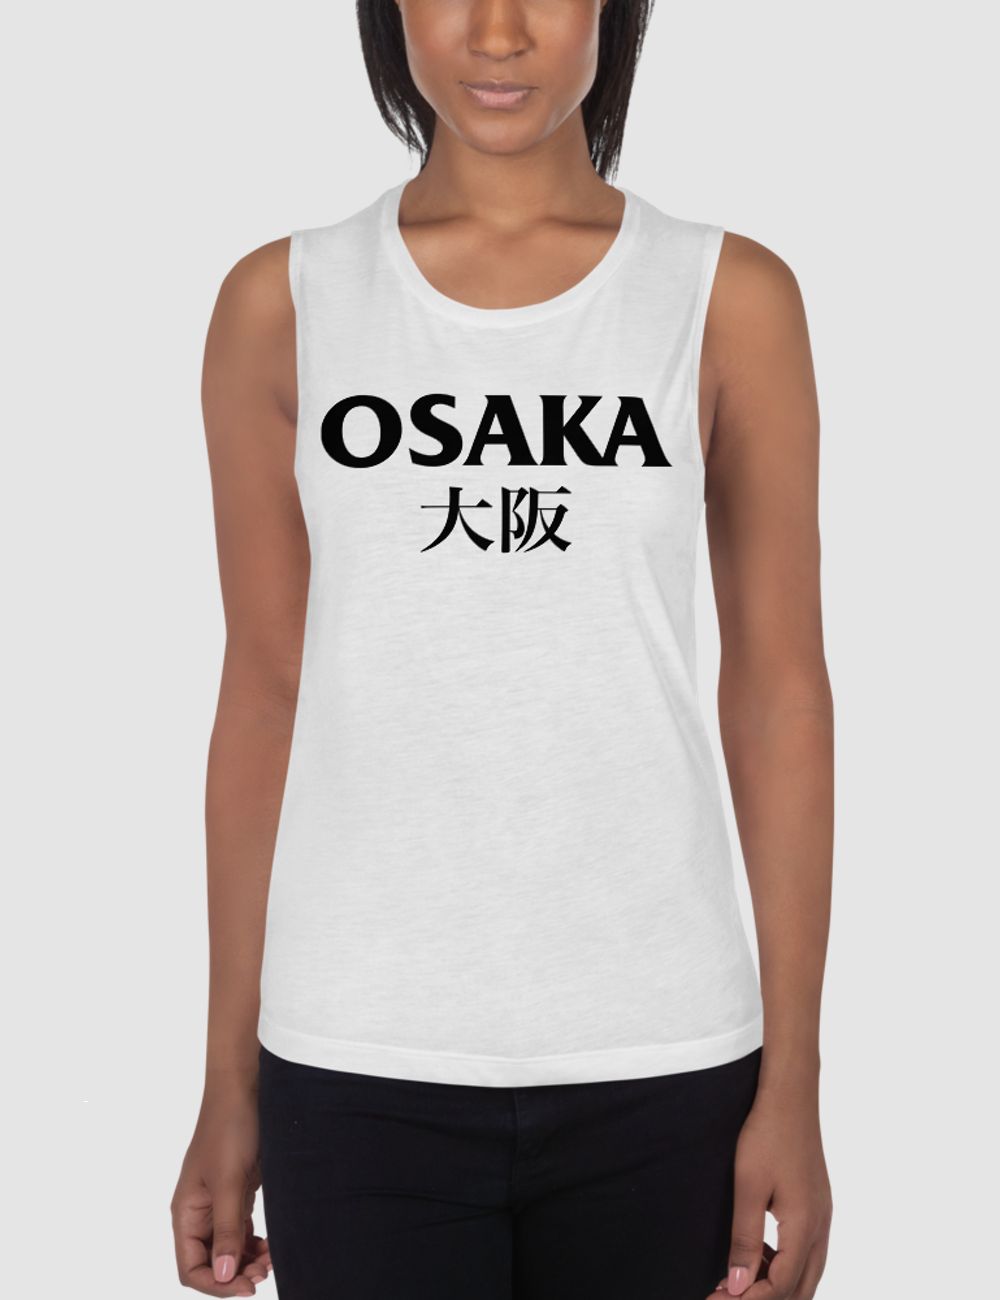 Osaka Women's Muscle Tank Top OniTakai